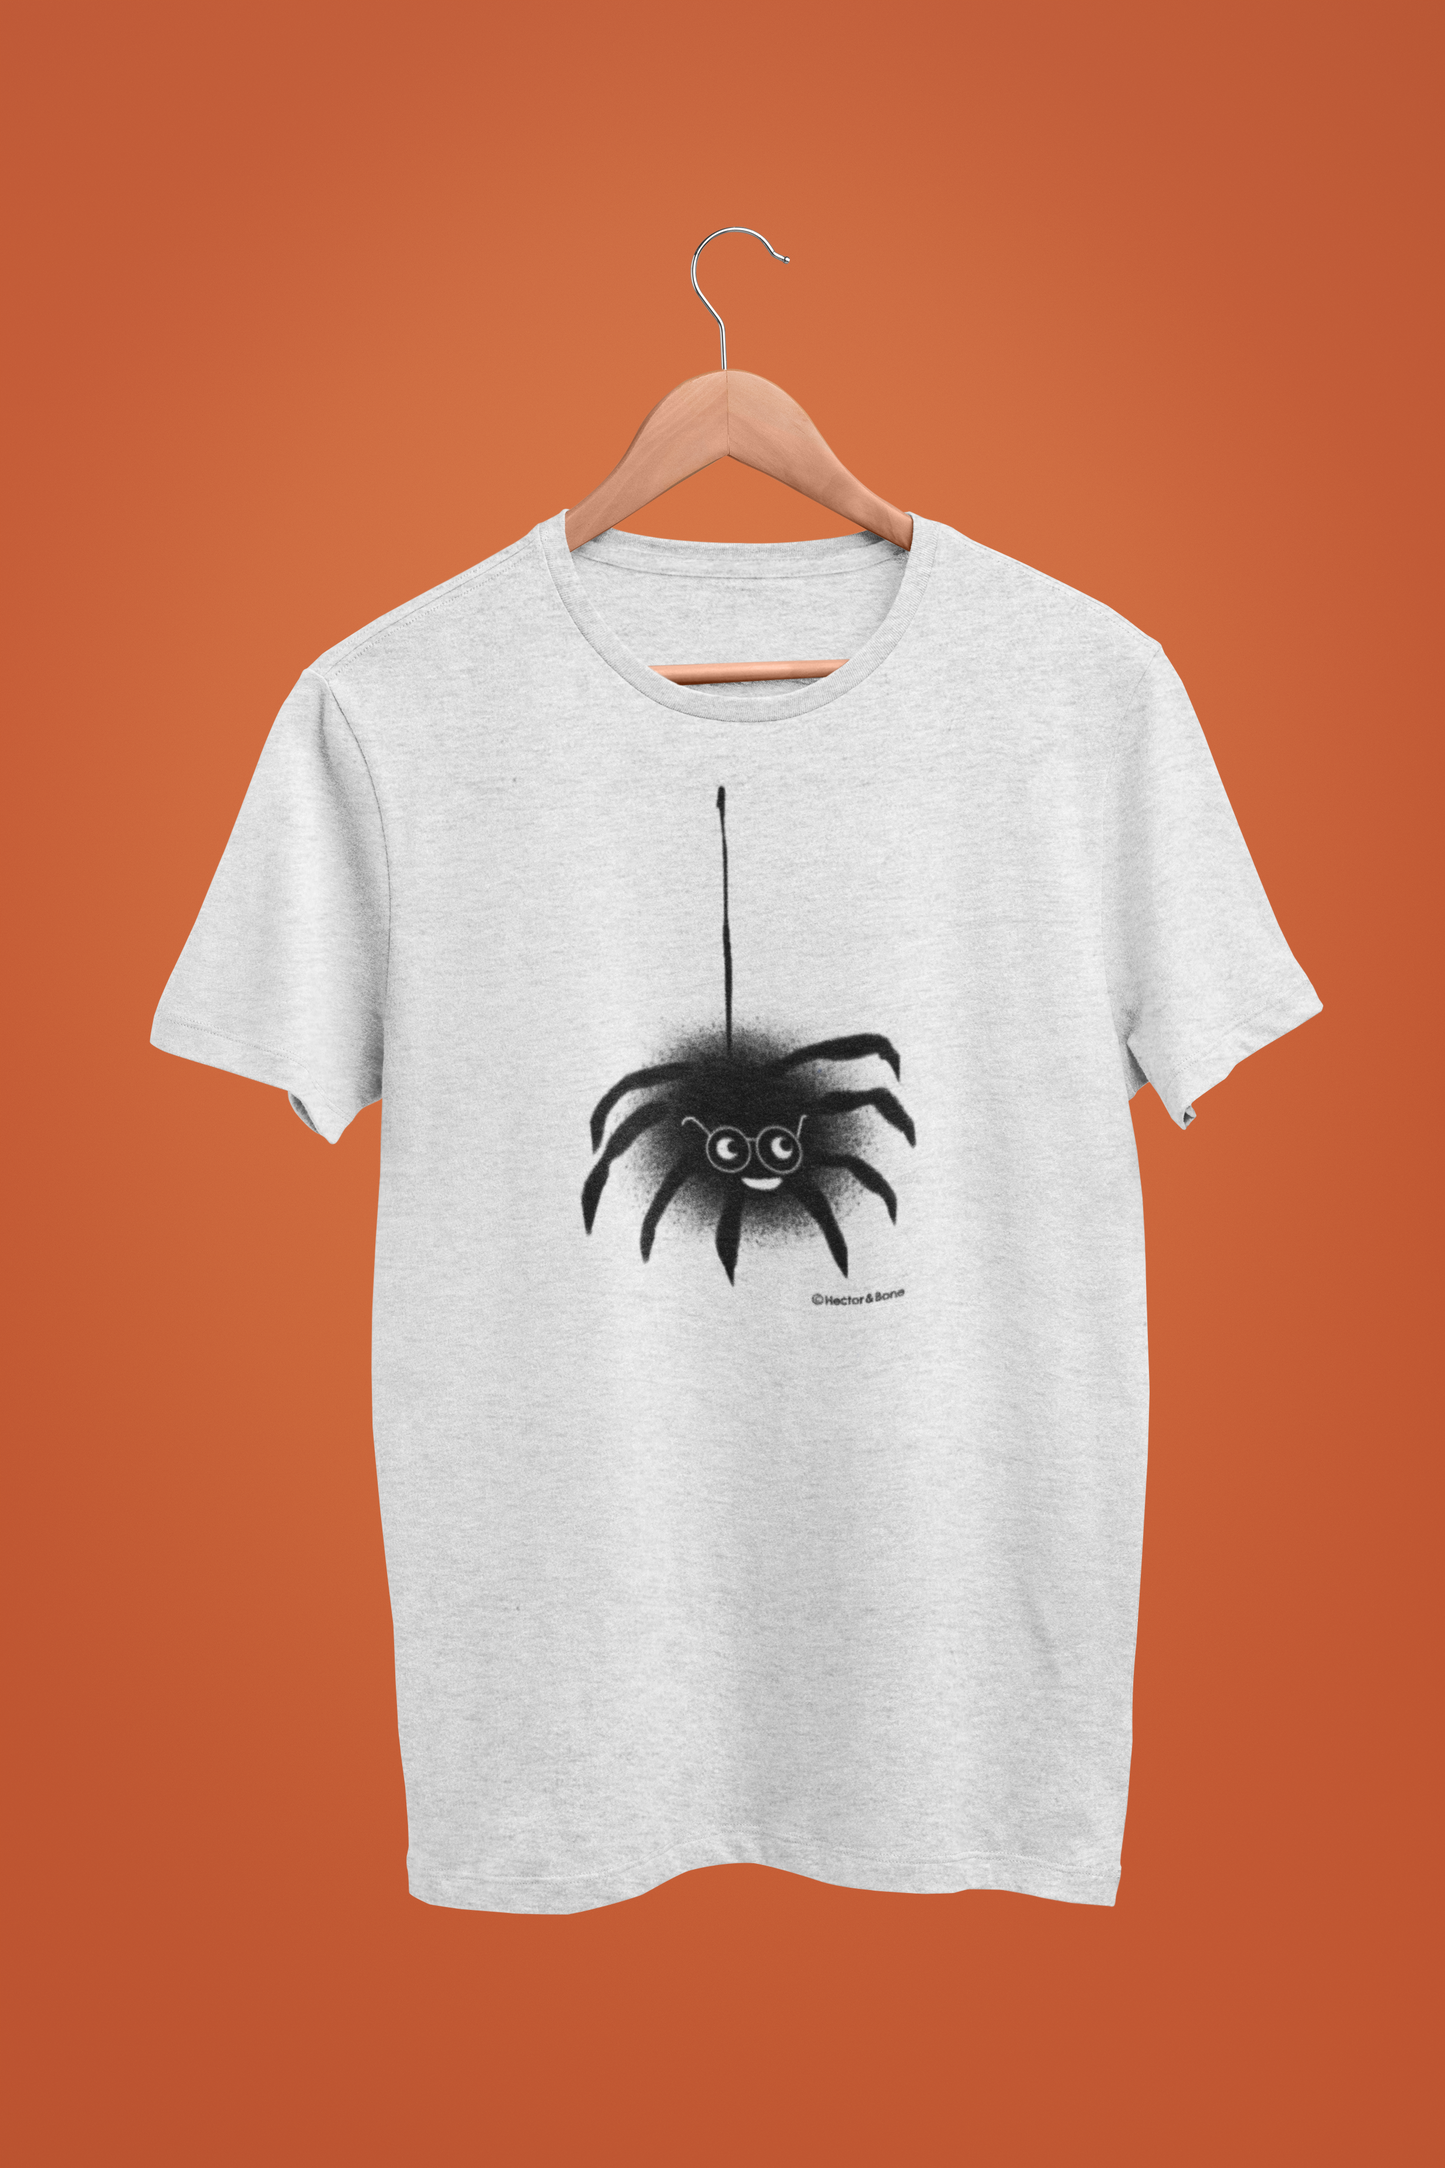 Spider T-shirt - A cute Spencer Spider Halloween original illustrated Spectacled Spider tshirt design on pumpkin orange colour Hector and Bone cotton tshirts